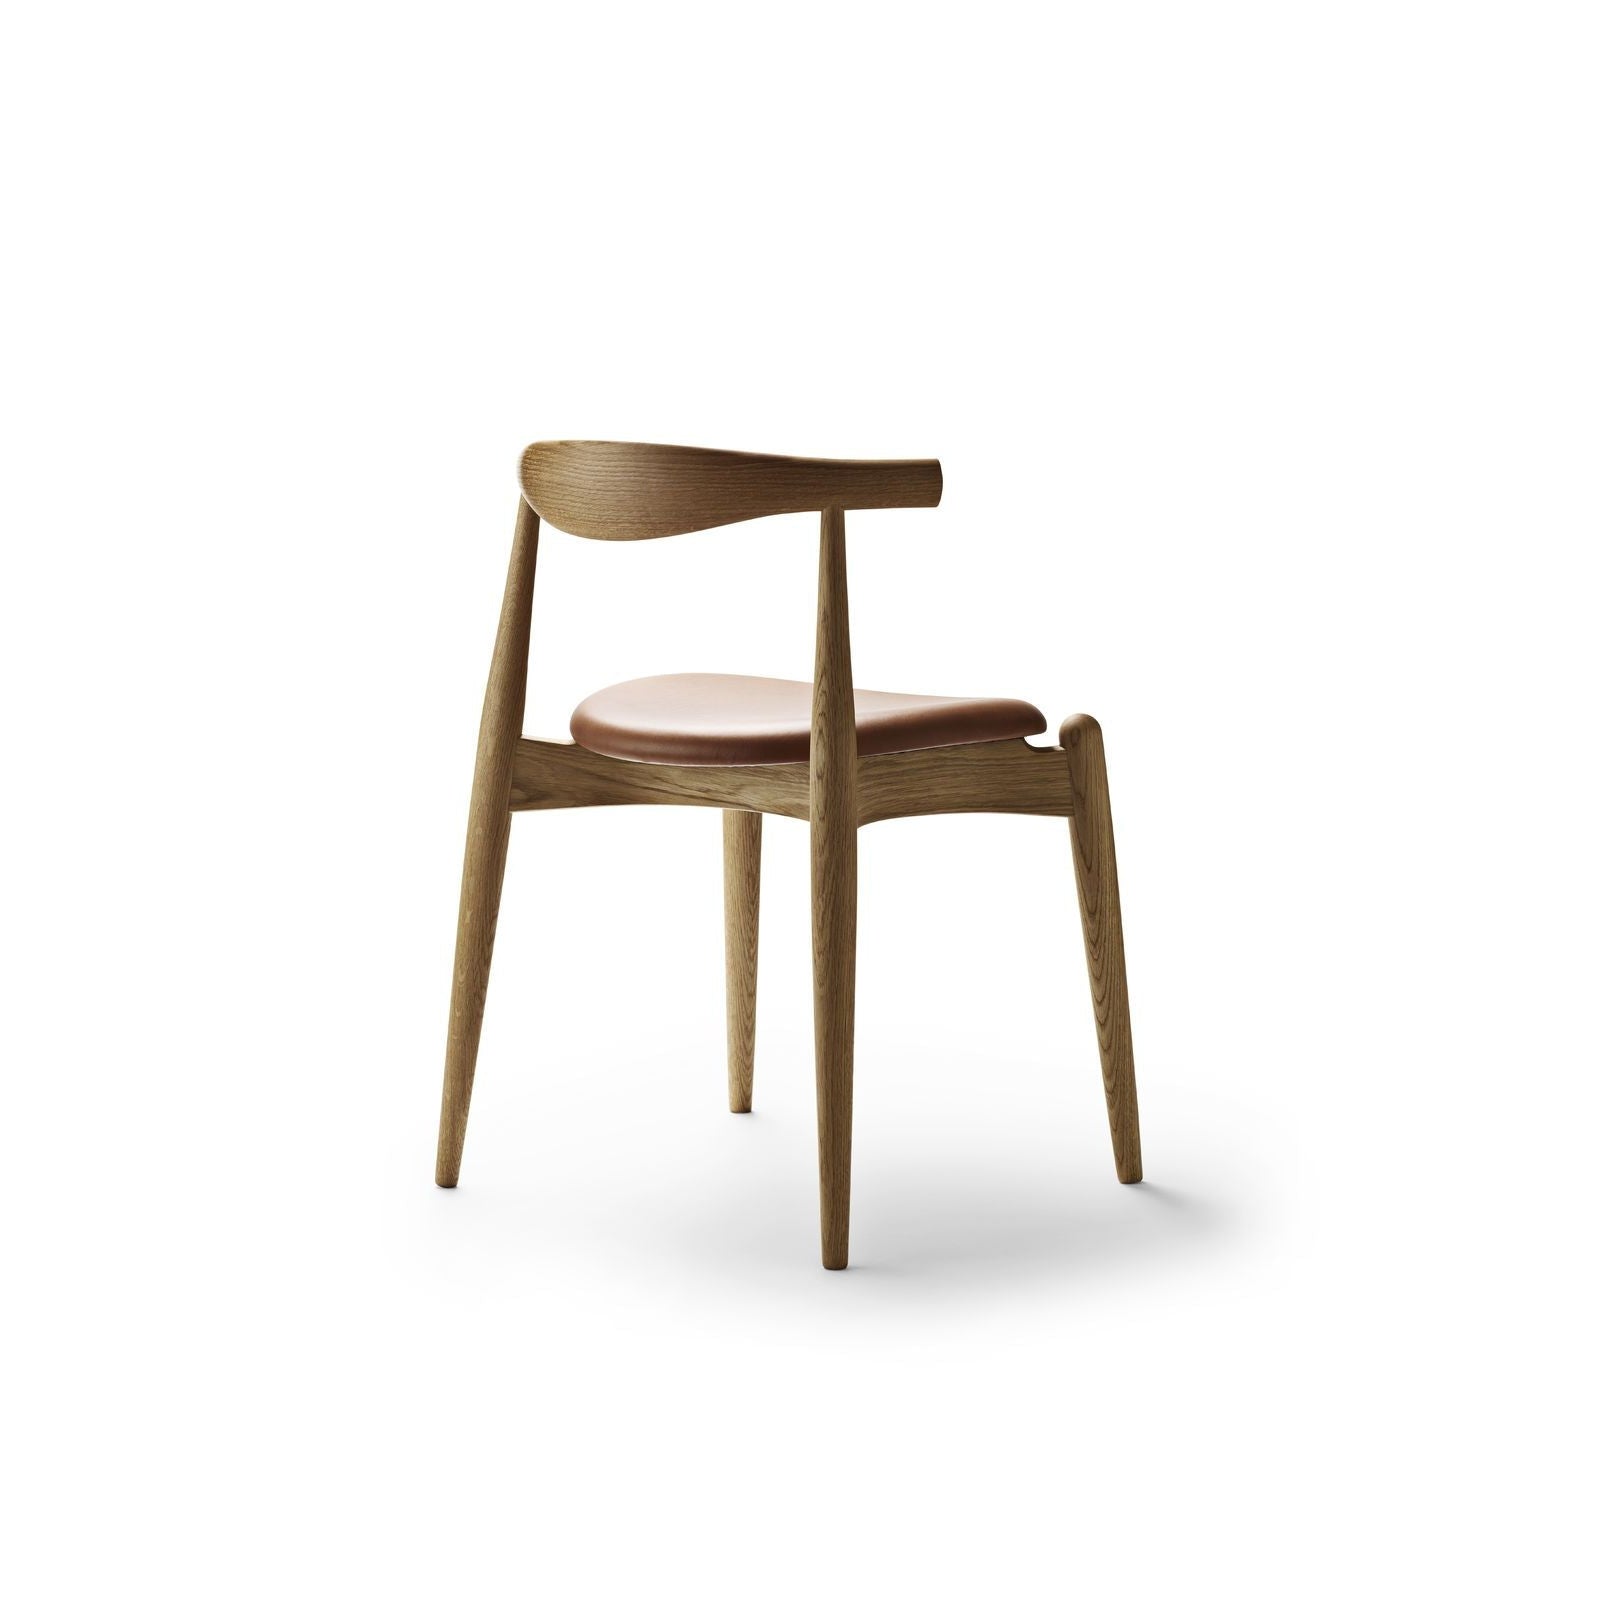 Carl Hansen Ch20 Elbow Chair, Oiled Oak/Light Brown Leather